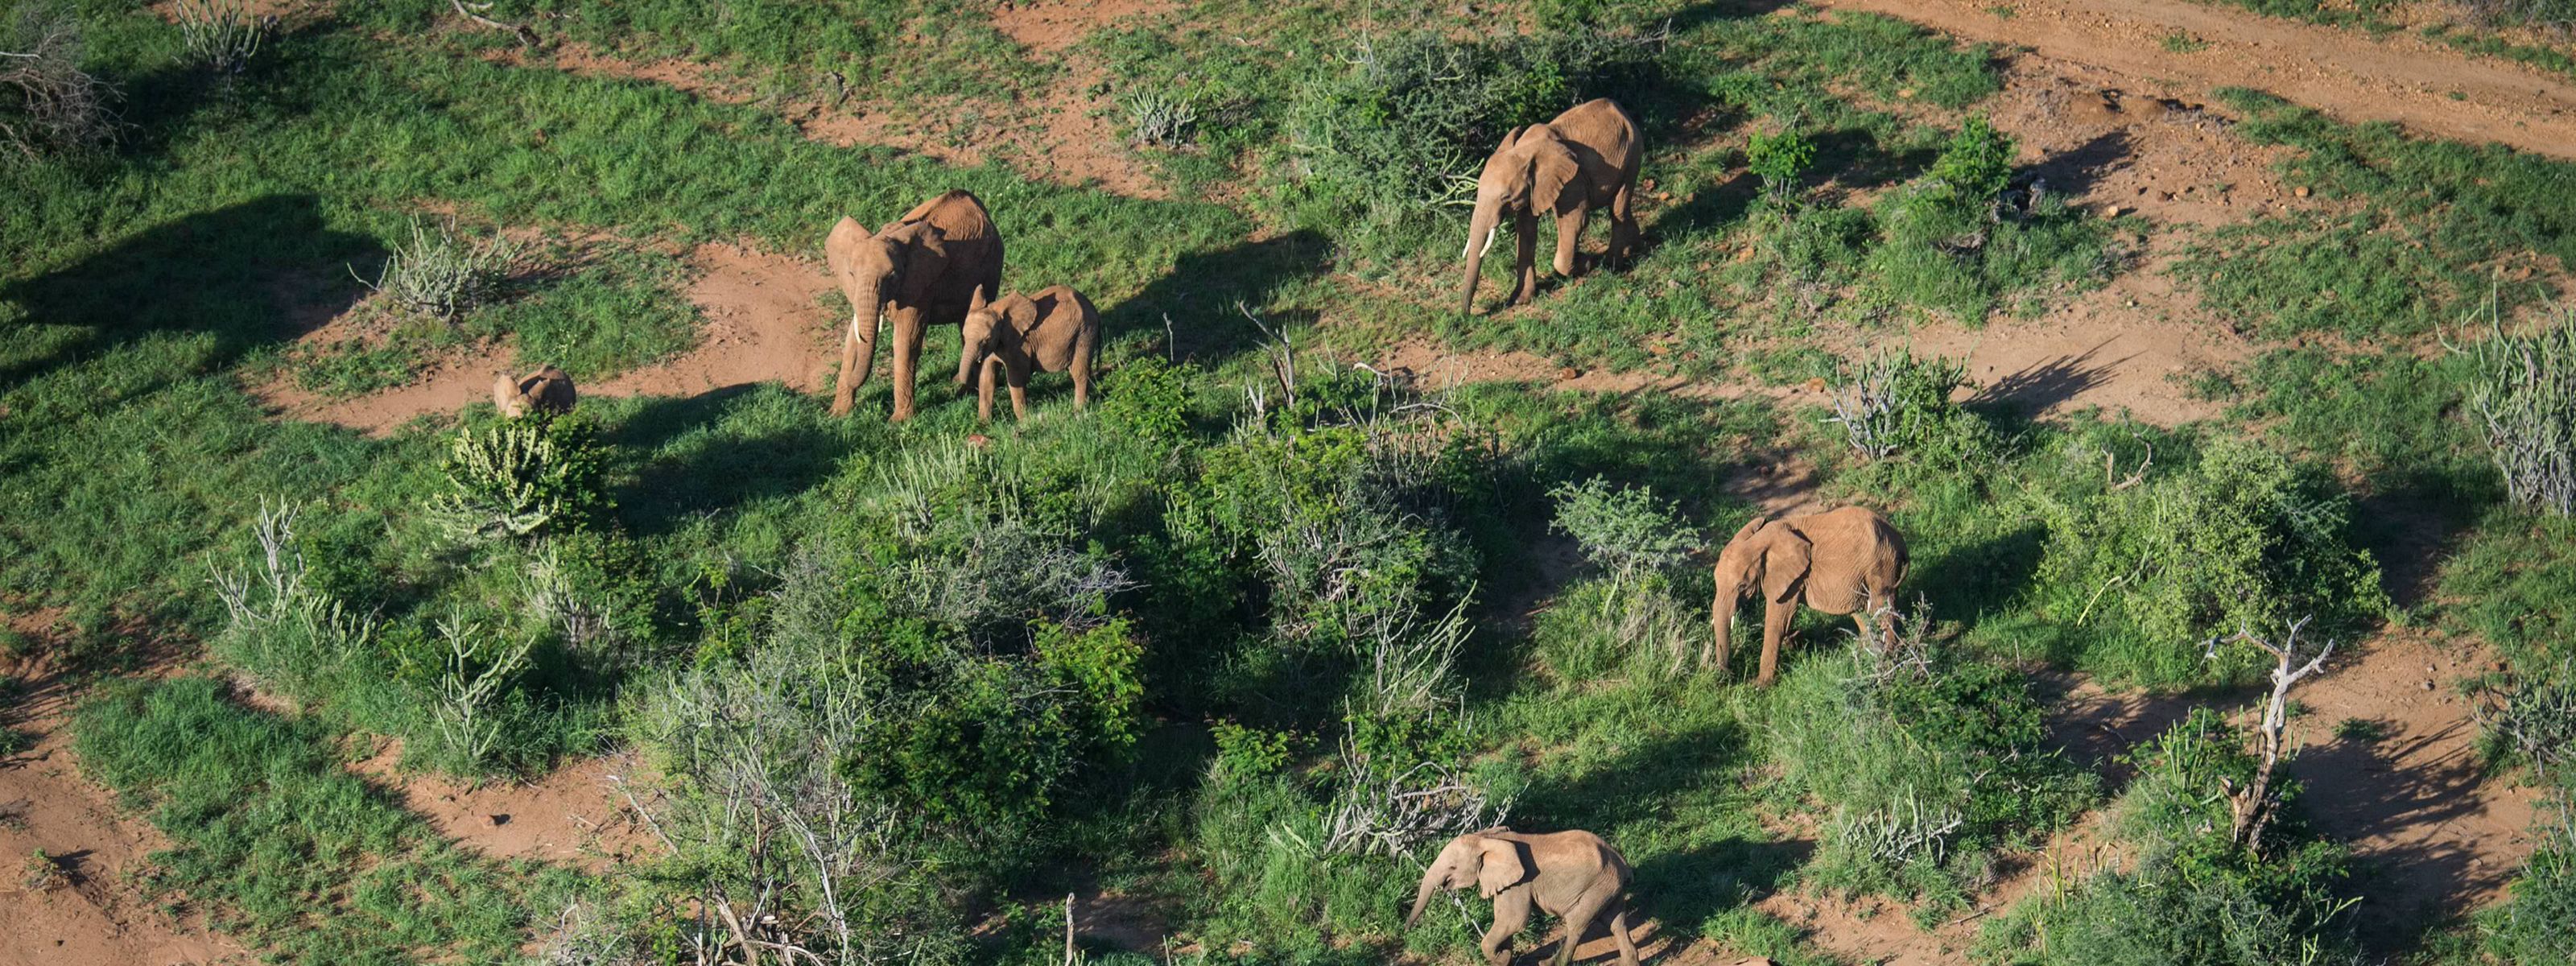 an aerial view of elephants walking through grasslands